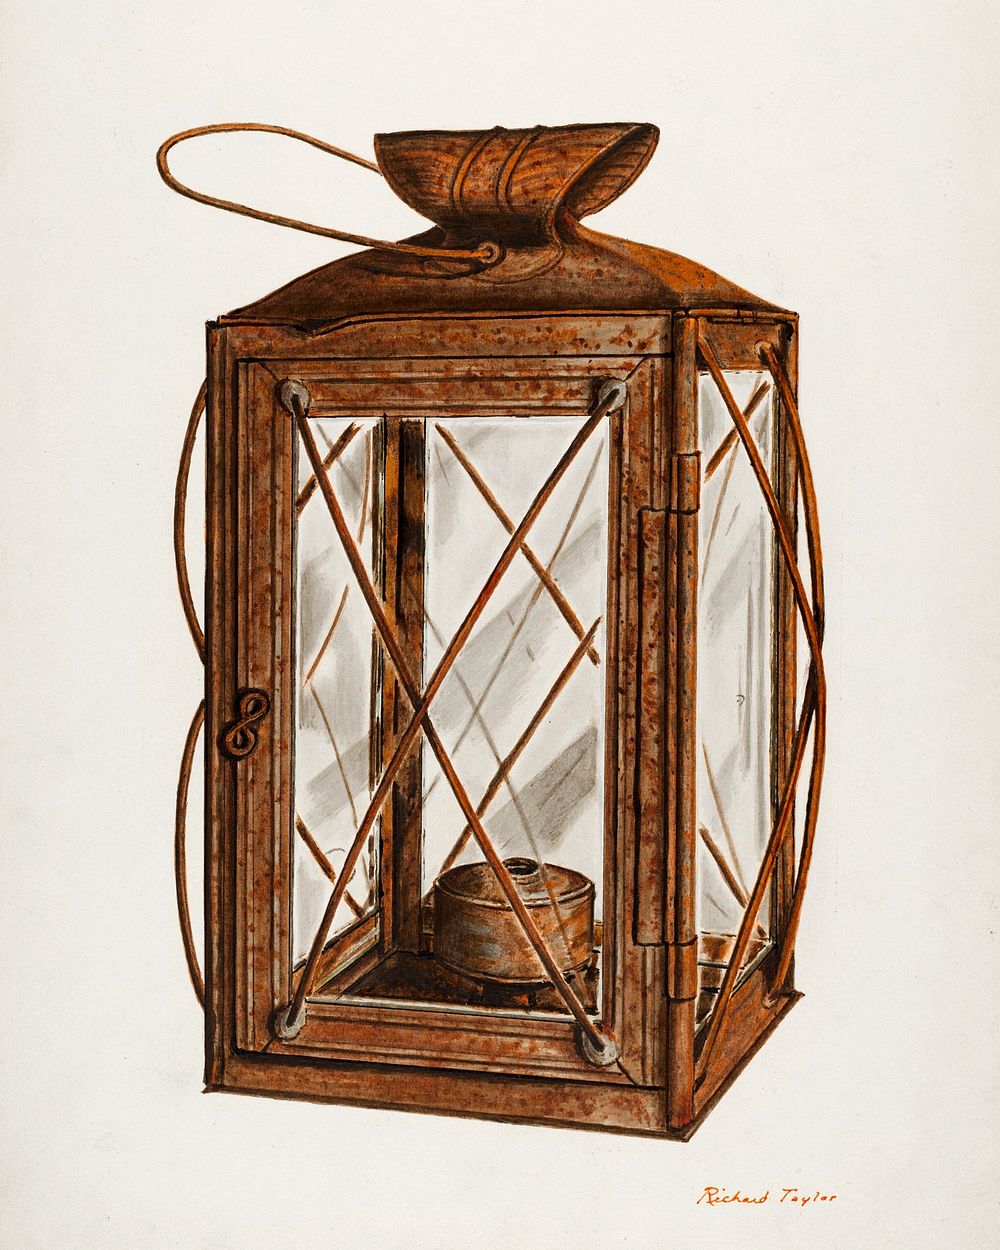 Farm Lantern (ca. 1940) by Richard Taylor. Original from The National Gallery of Art. Digitally enhanced by rawpixel.